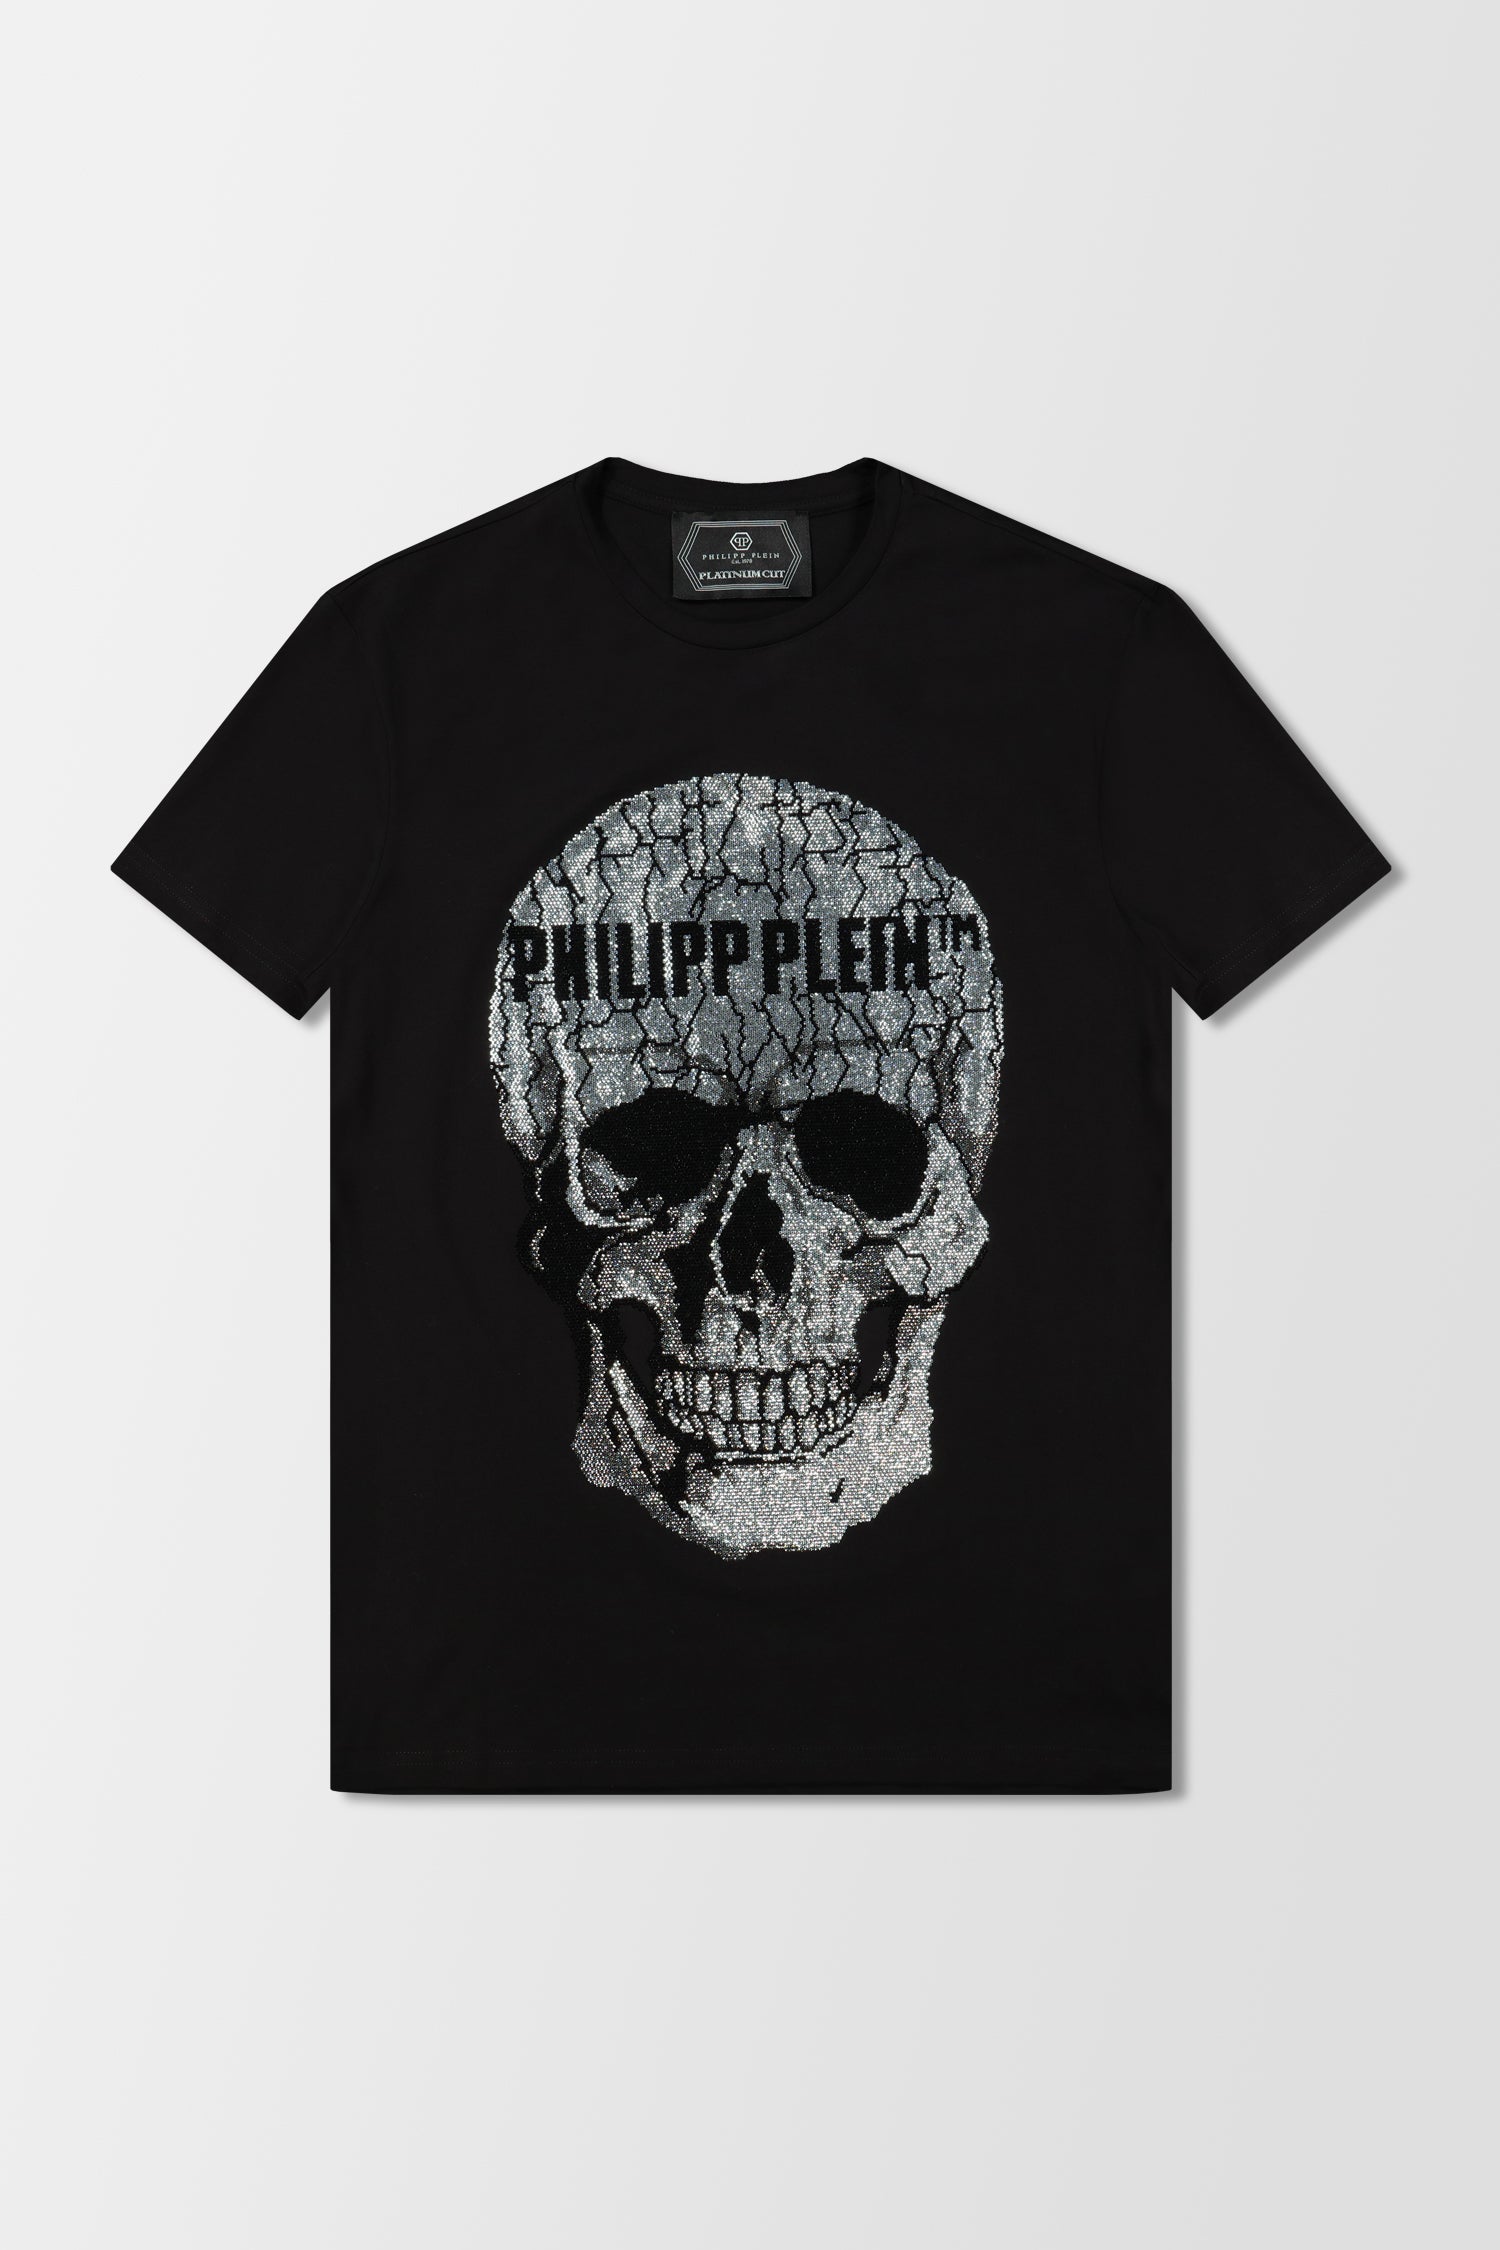 Philipp Plein Black Round Neck SS Skull Rhinestone T-Shirt